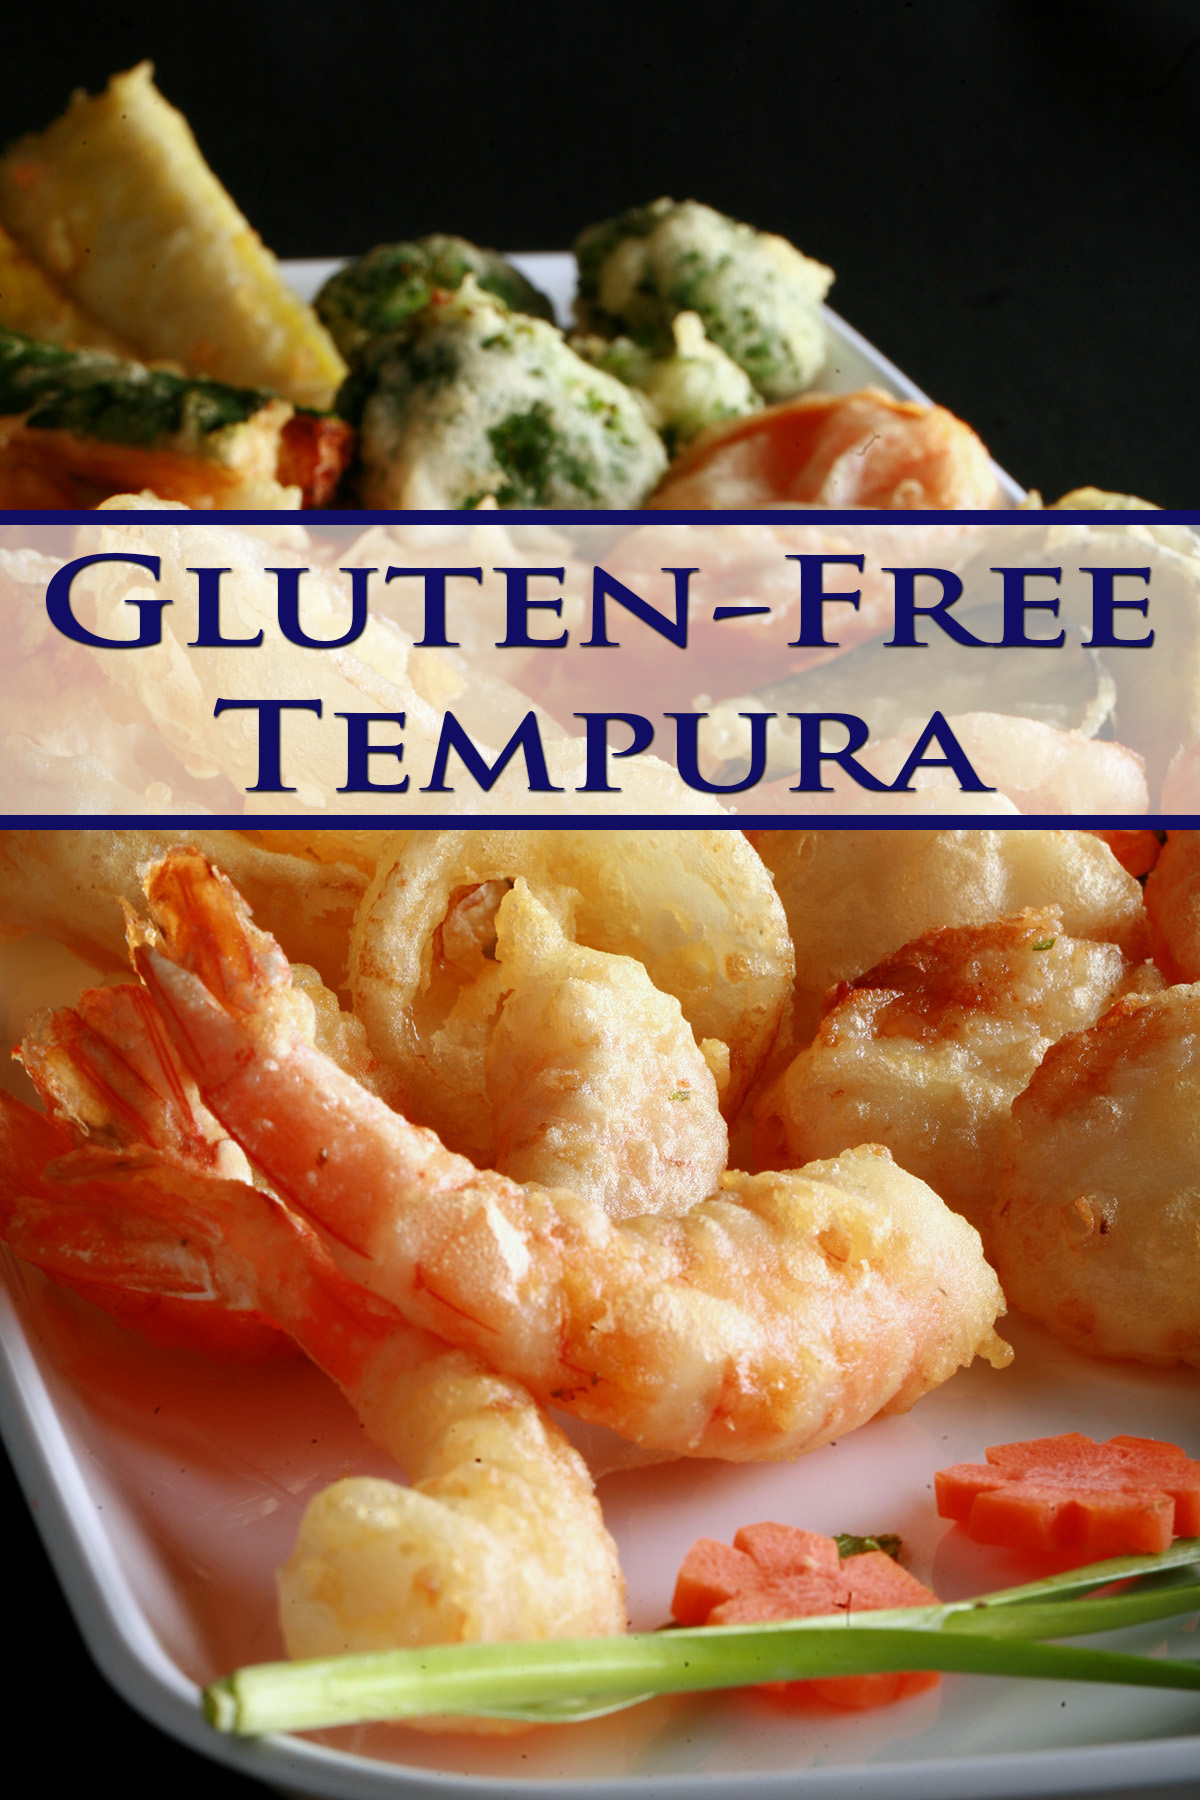 A tray of gluten free tempura shrimp and vegetables.